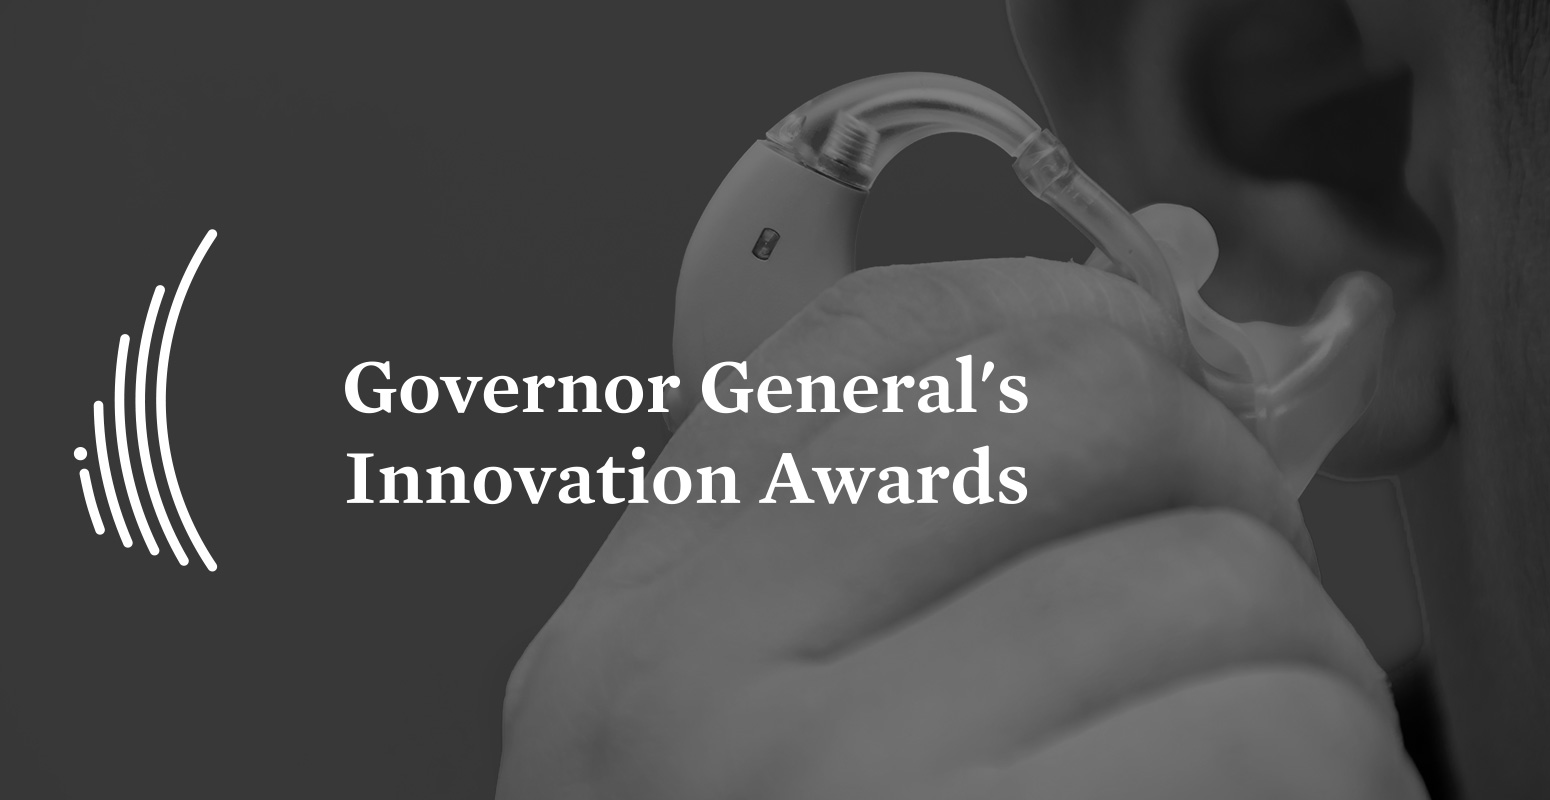 governor general innovation award logo on image of hearing aid bg